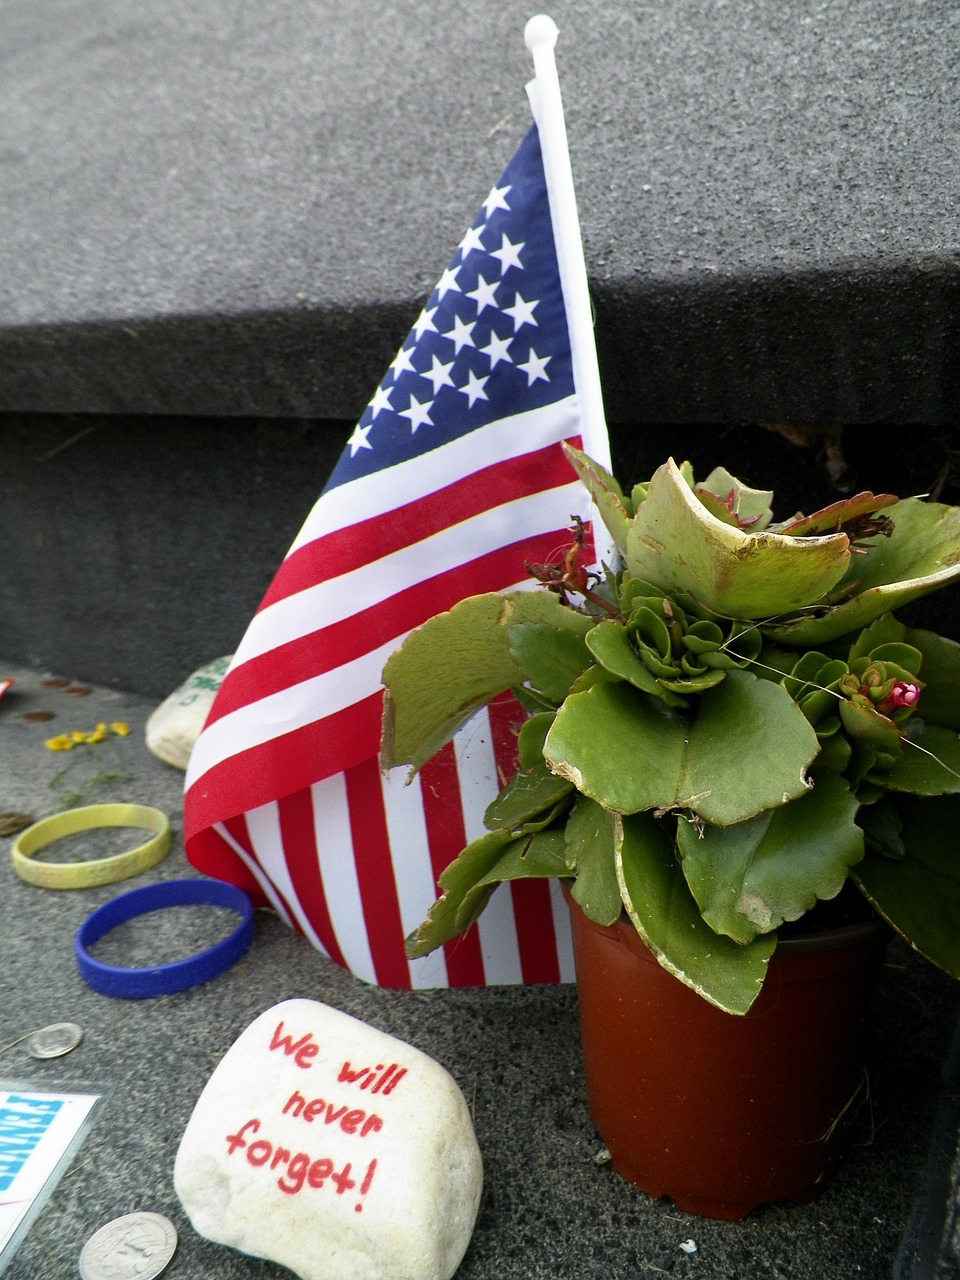 VIDEO: REMEMBERING 9/11